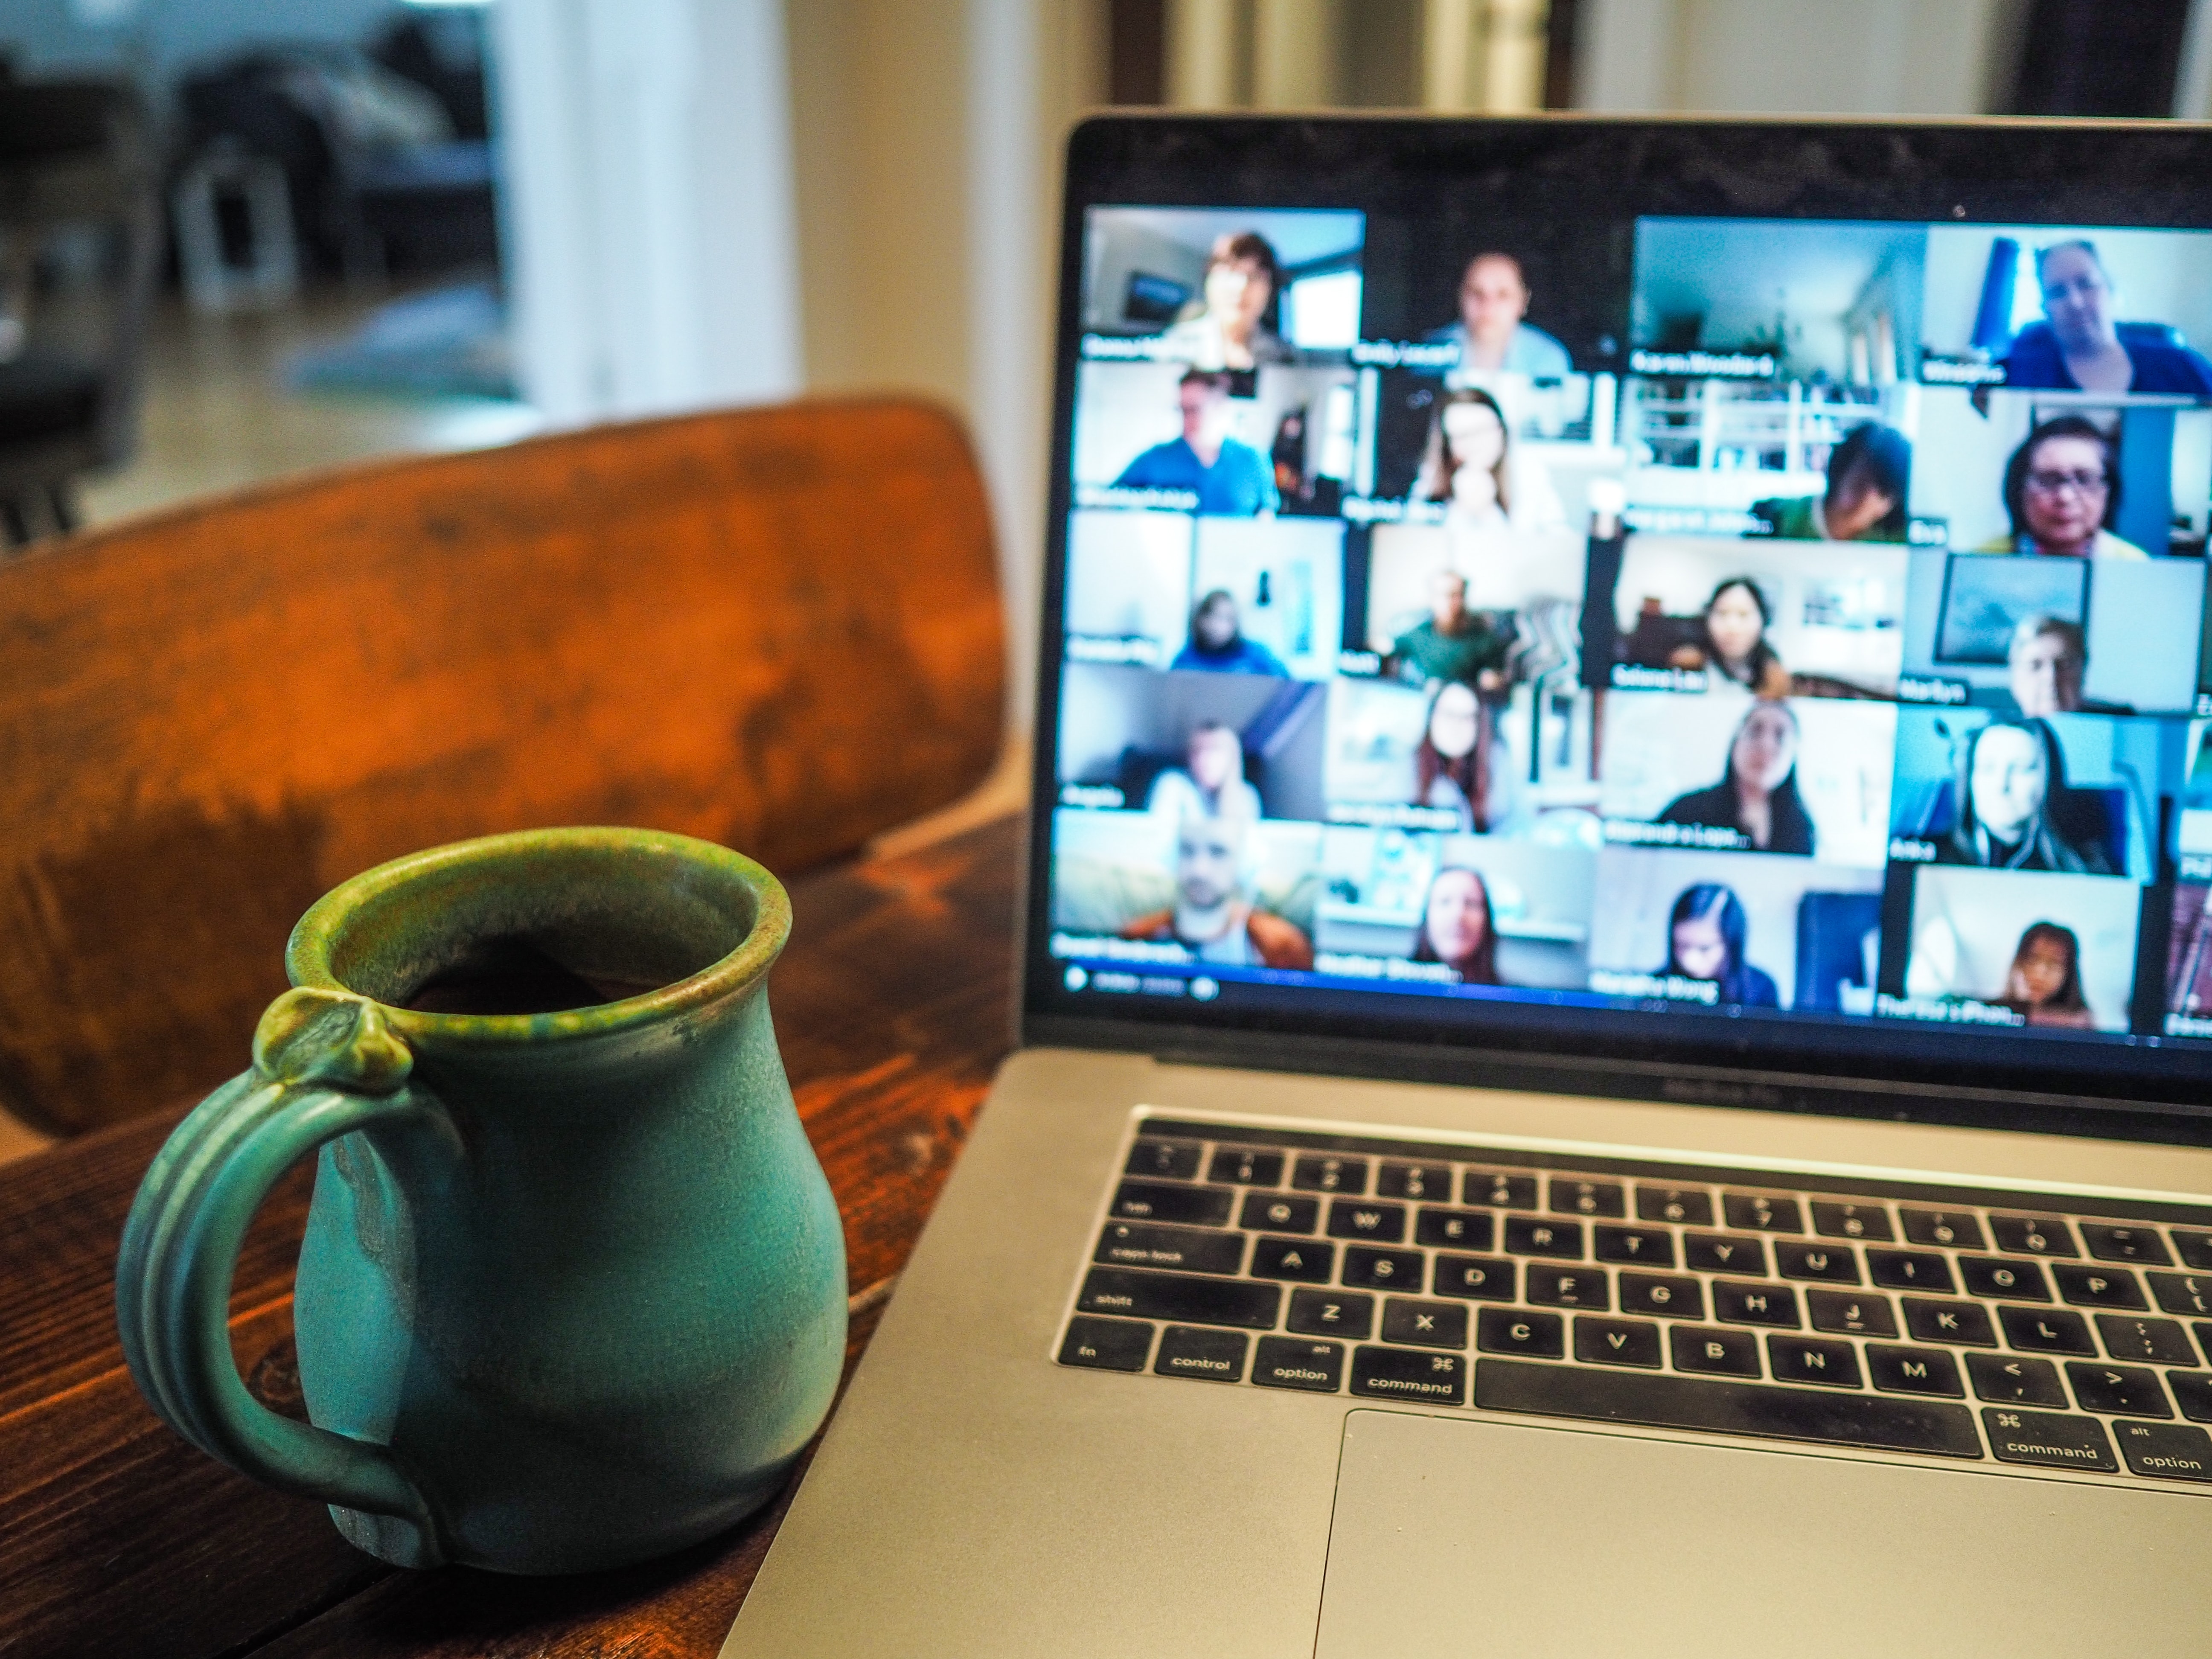 laptop with zoom meeting and coffee mug